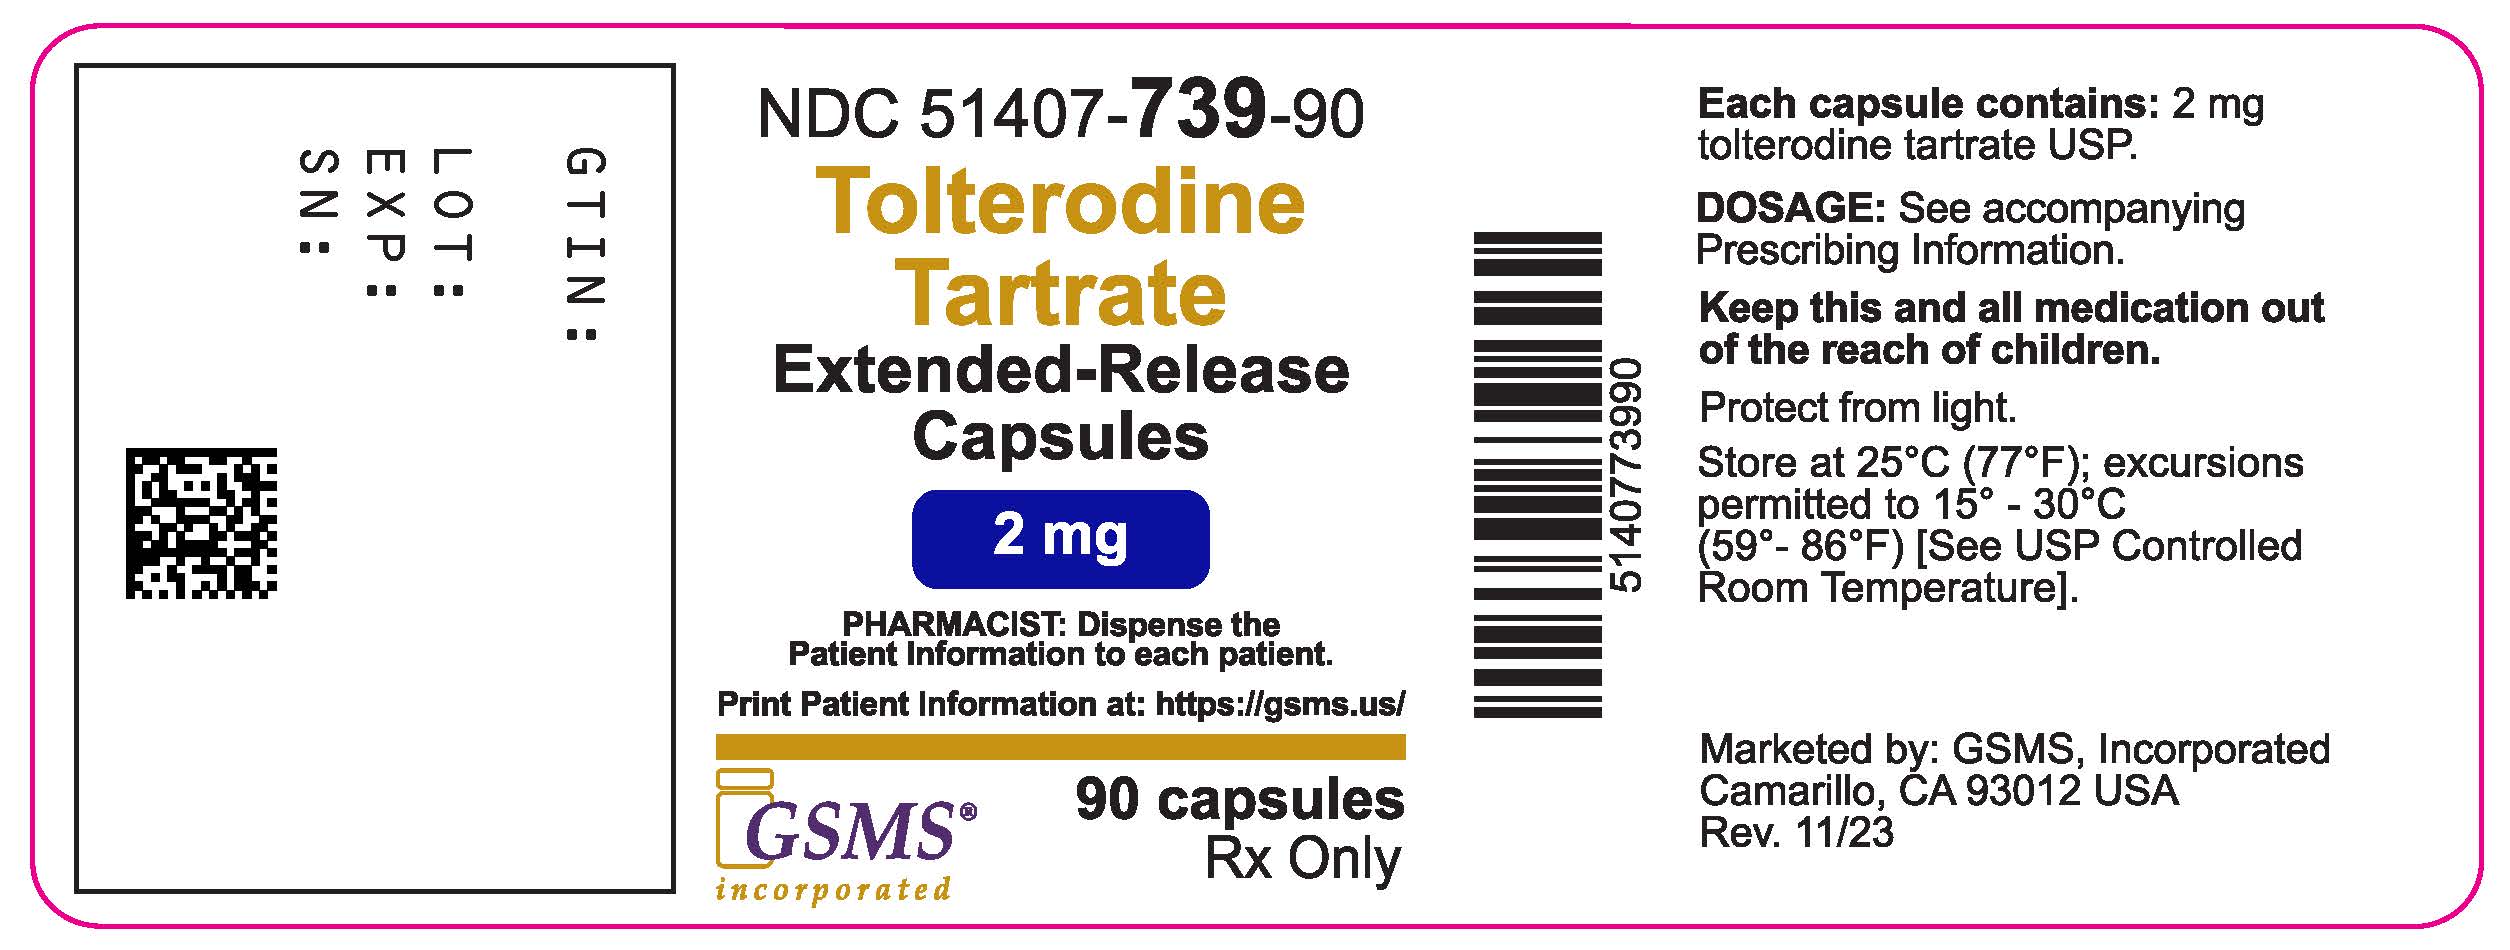 51407-739-90LB - Tolterodine Tartrate ER Capsules - ANI - Rev. 1123.jpg